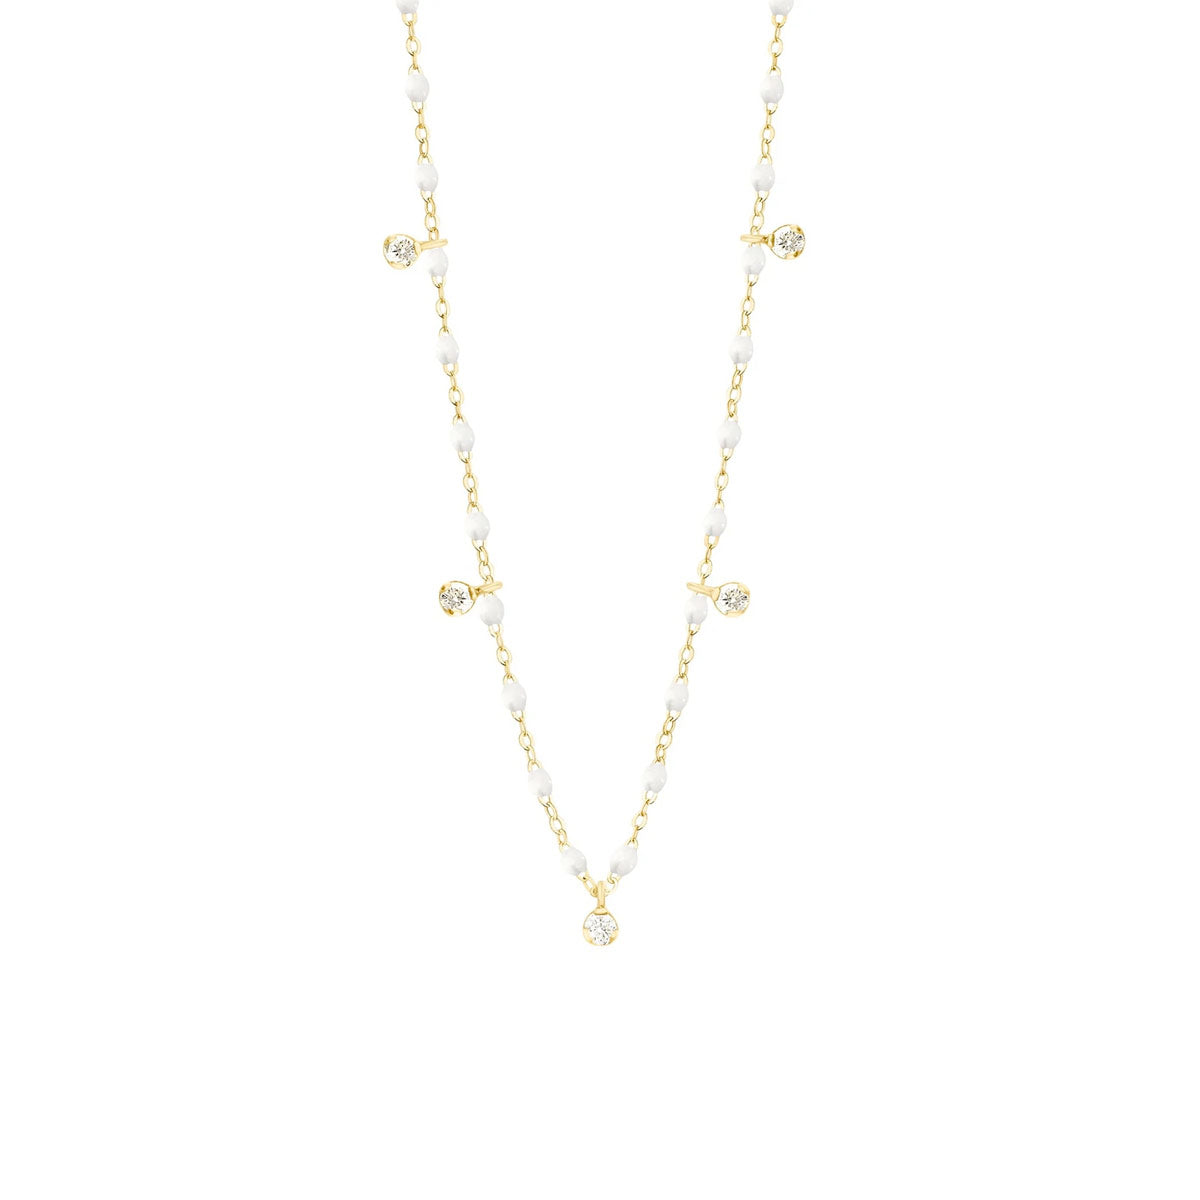 Gigi Supreme 45cm Diamond Necklace in 18K Yellow Gold & White